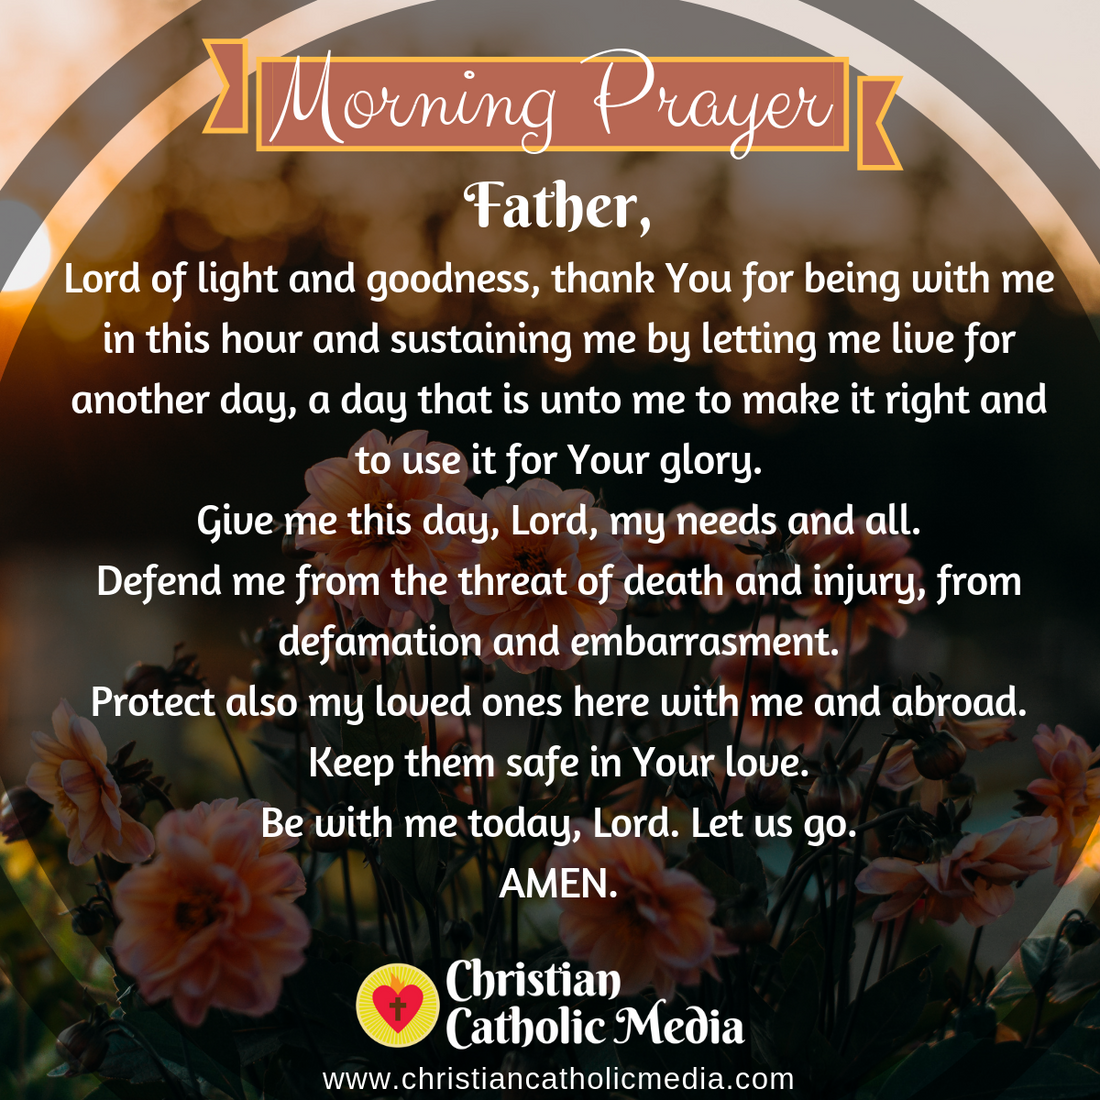 Morning Prayer Catholic Monday 5-11-2020